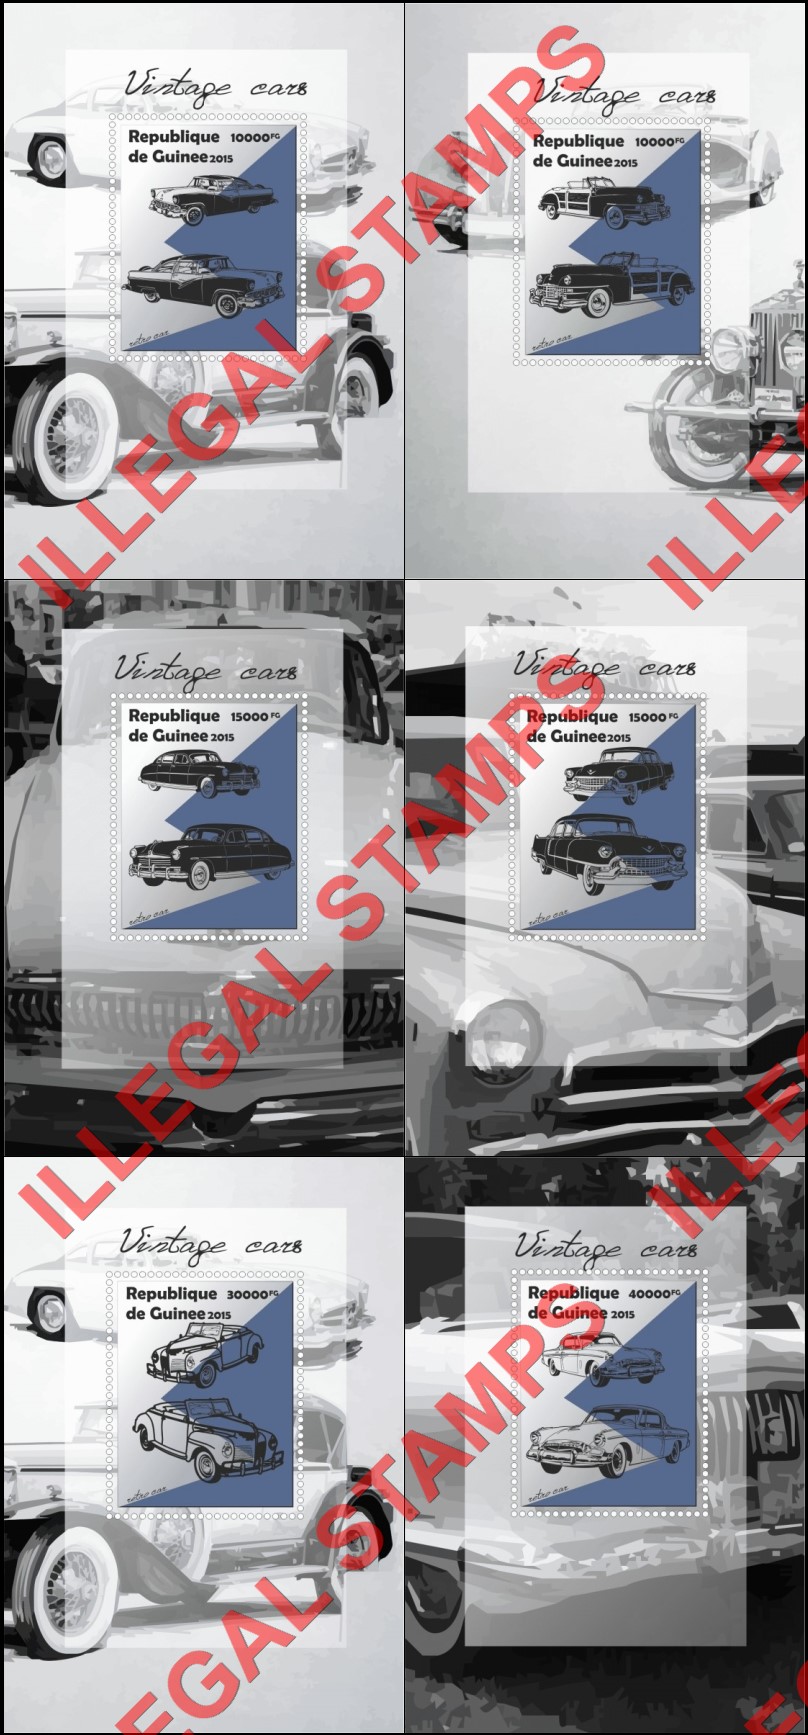 Guinea Republic 2015 Vintage Cars Illegal Stamp Souvenir Sheets of 1